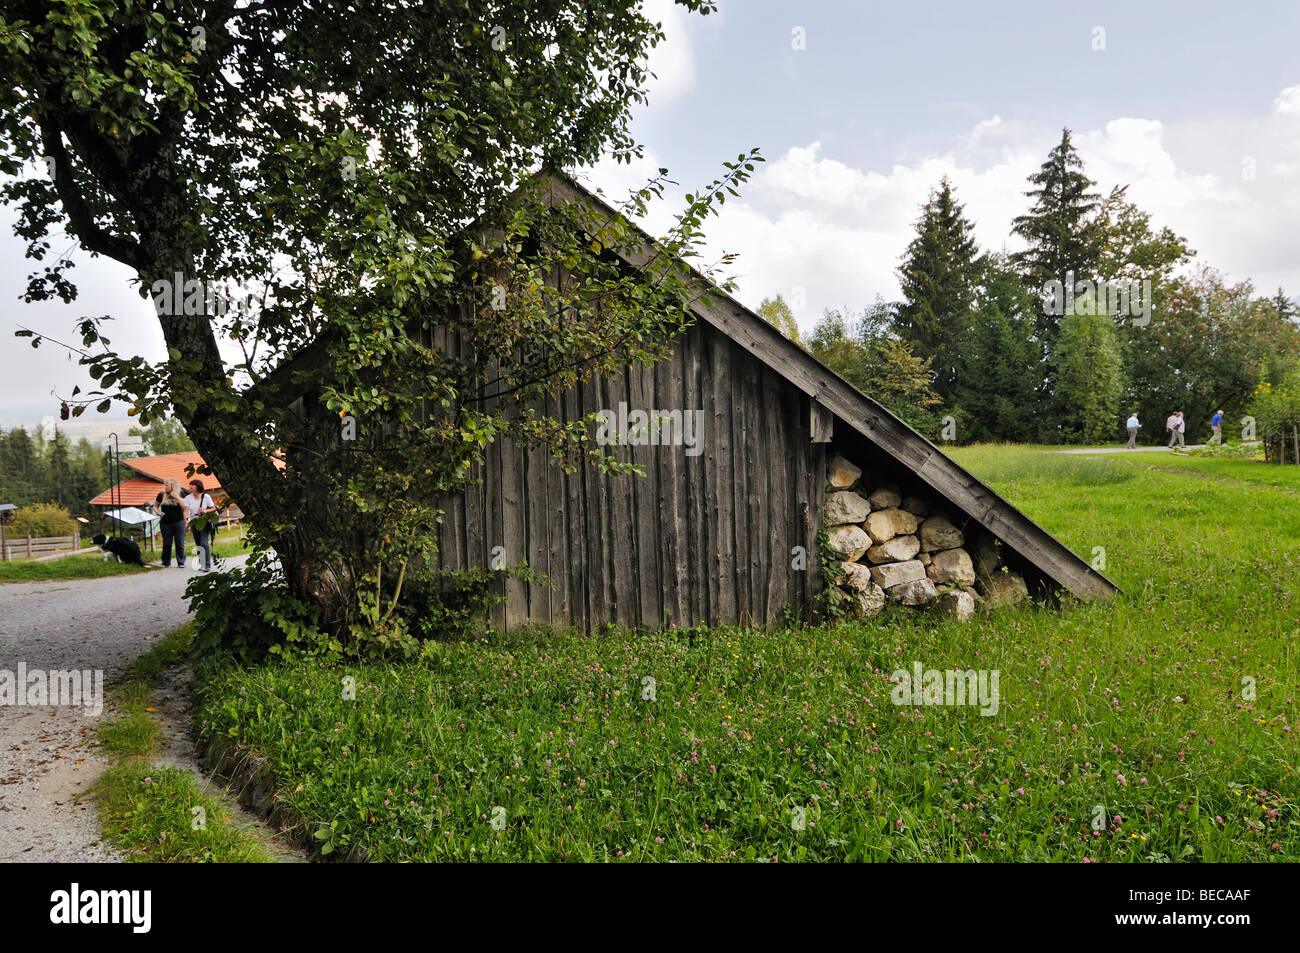 haystack-on-a-meadow-glentleiten-farming-museum-bavaria-germany-europe-BECAAF.jpg